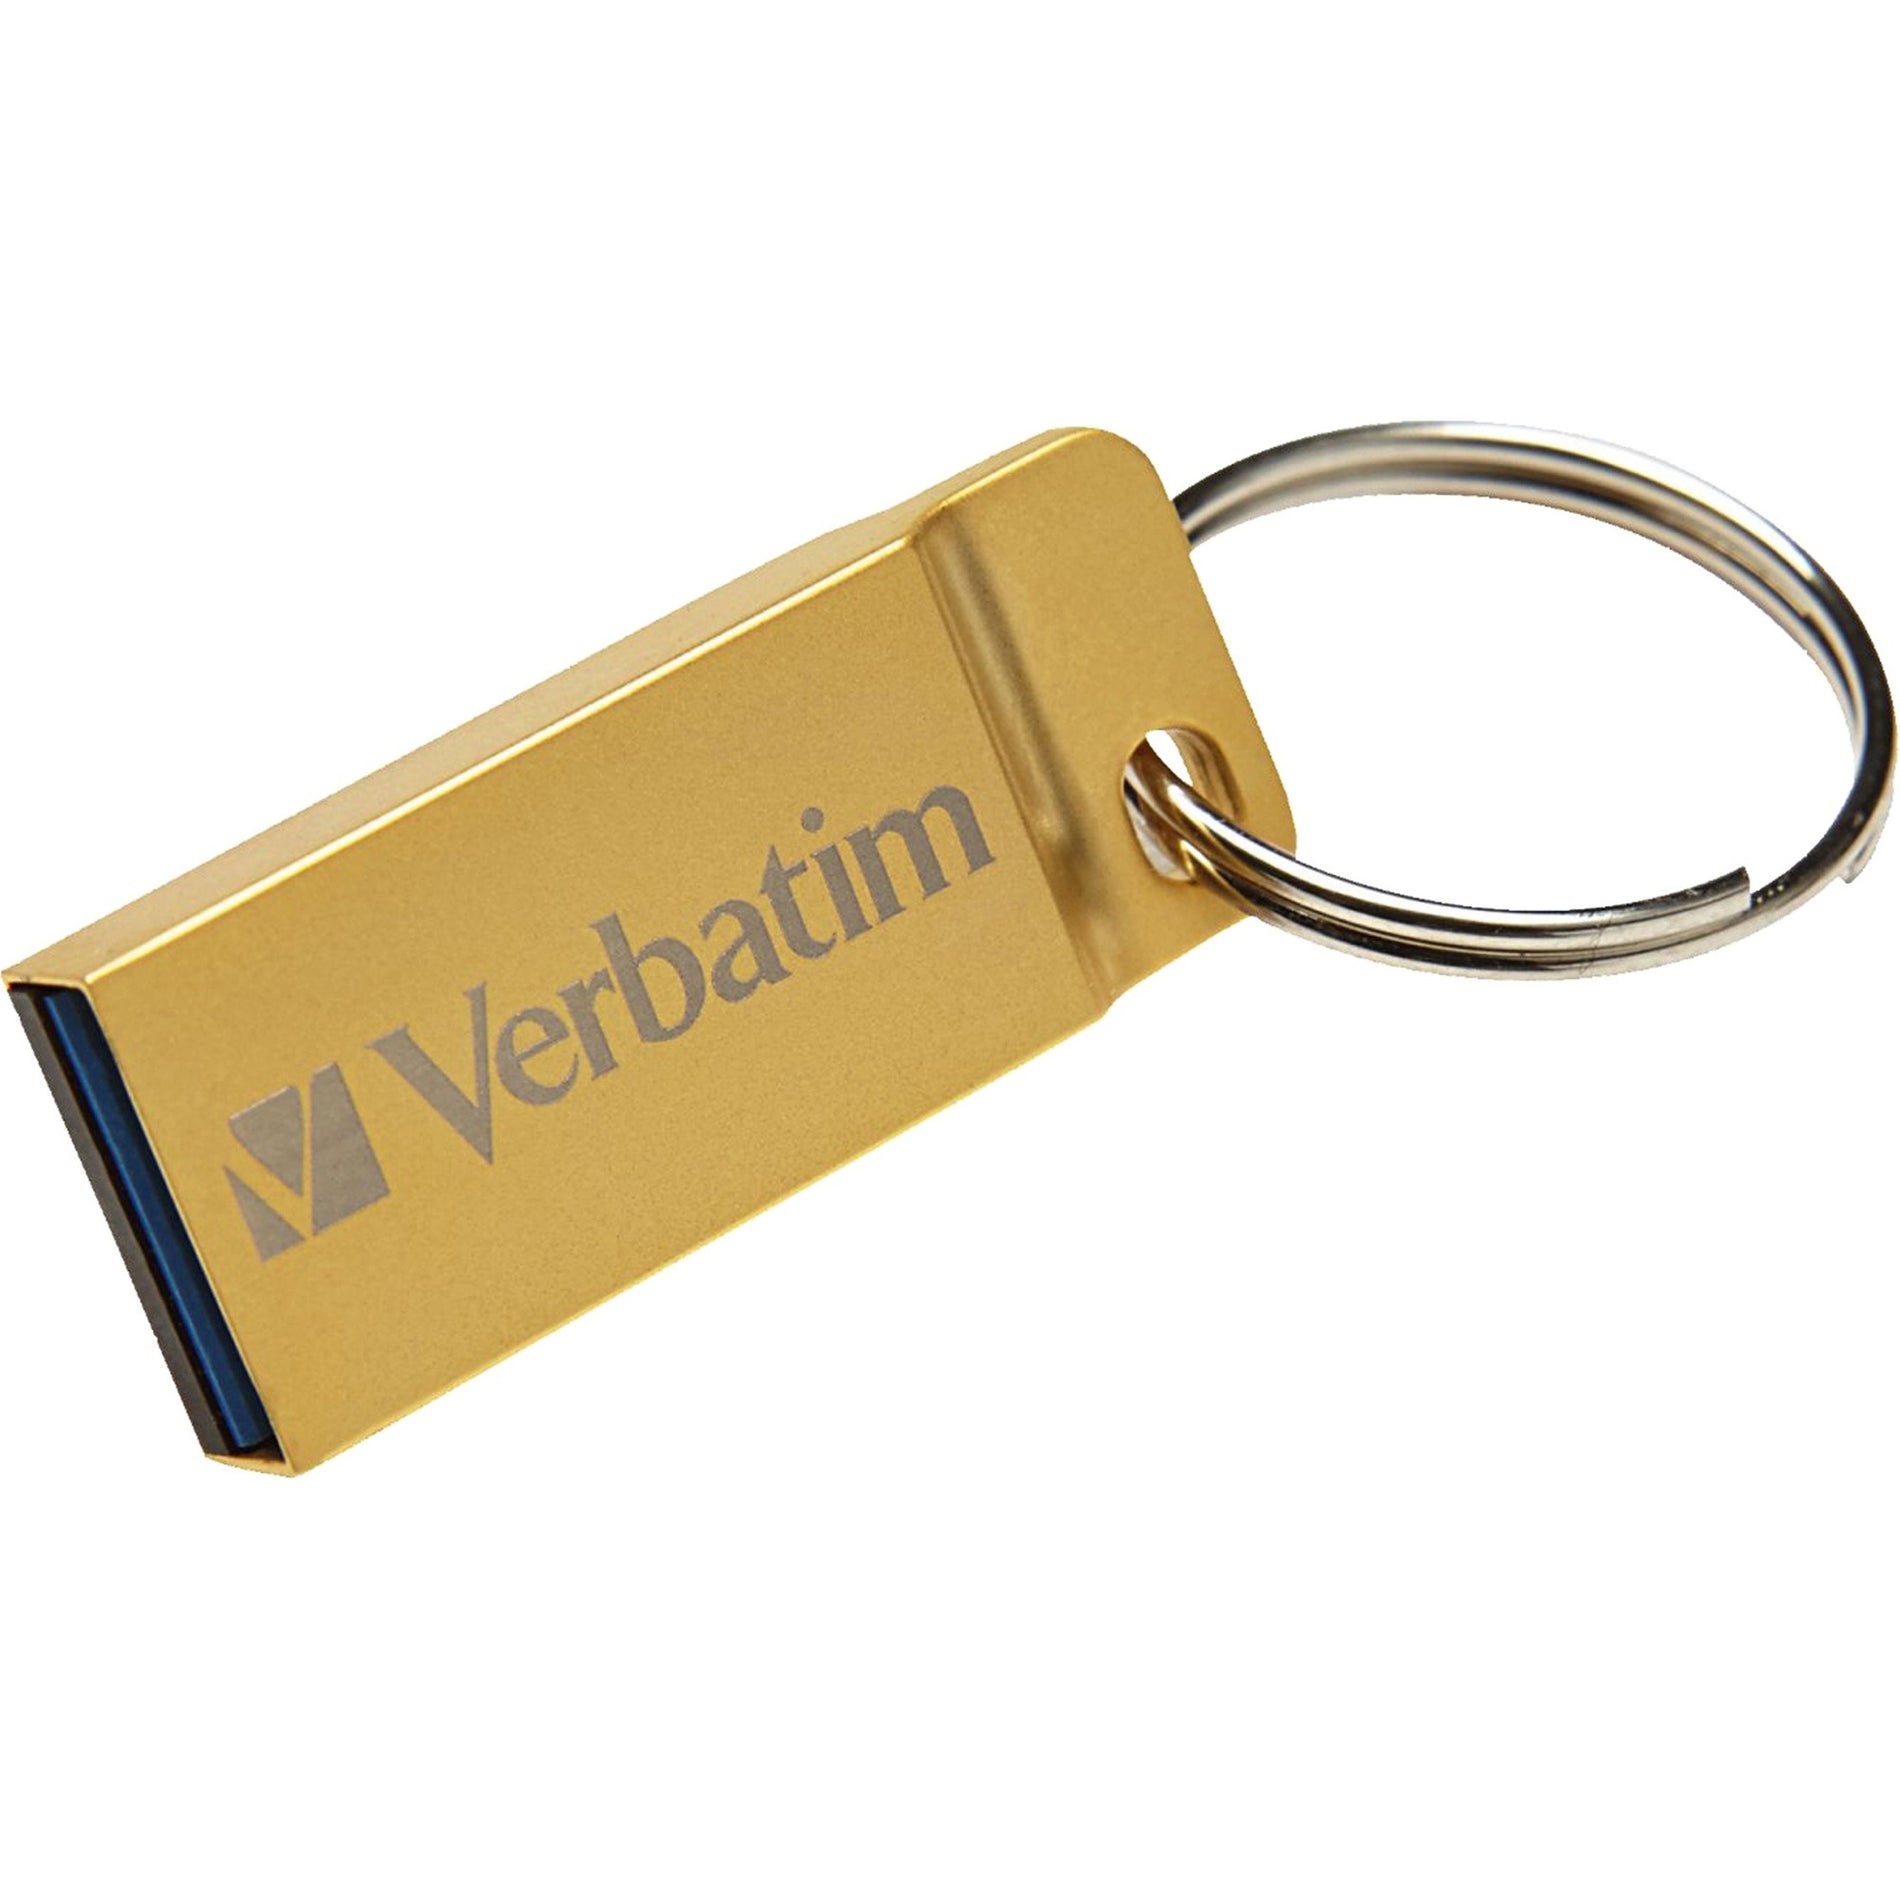 Verbatim 99104 Metal Executive USB 3.0 Flash Drive - Gold, 16GB Storage Capacity